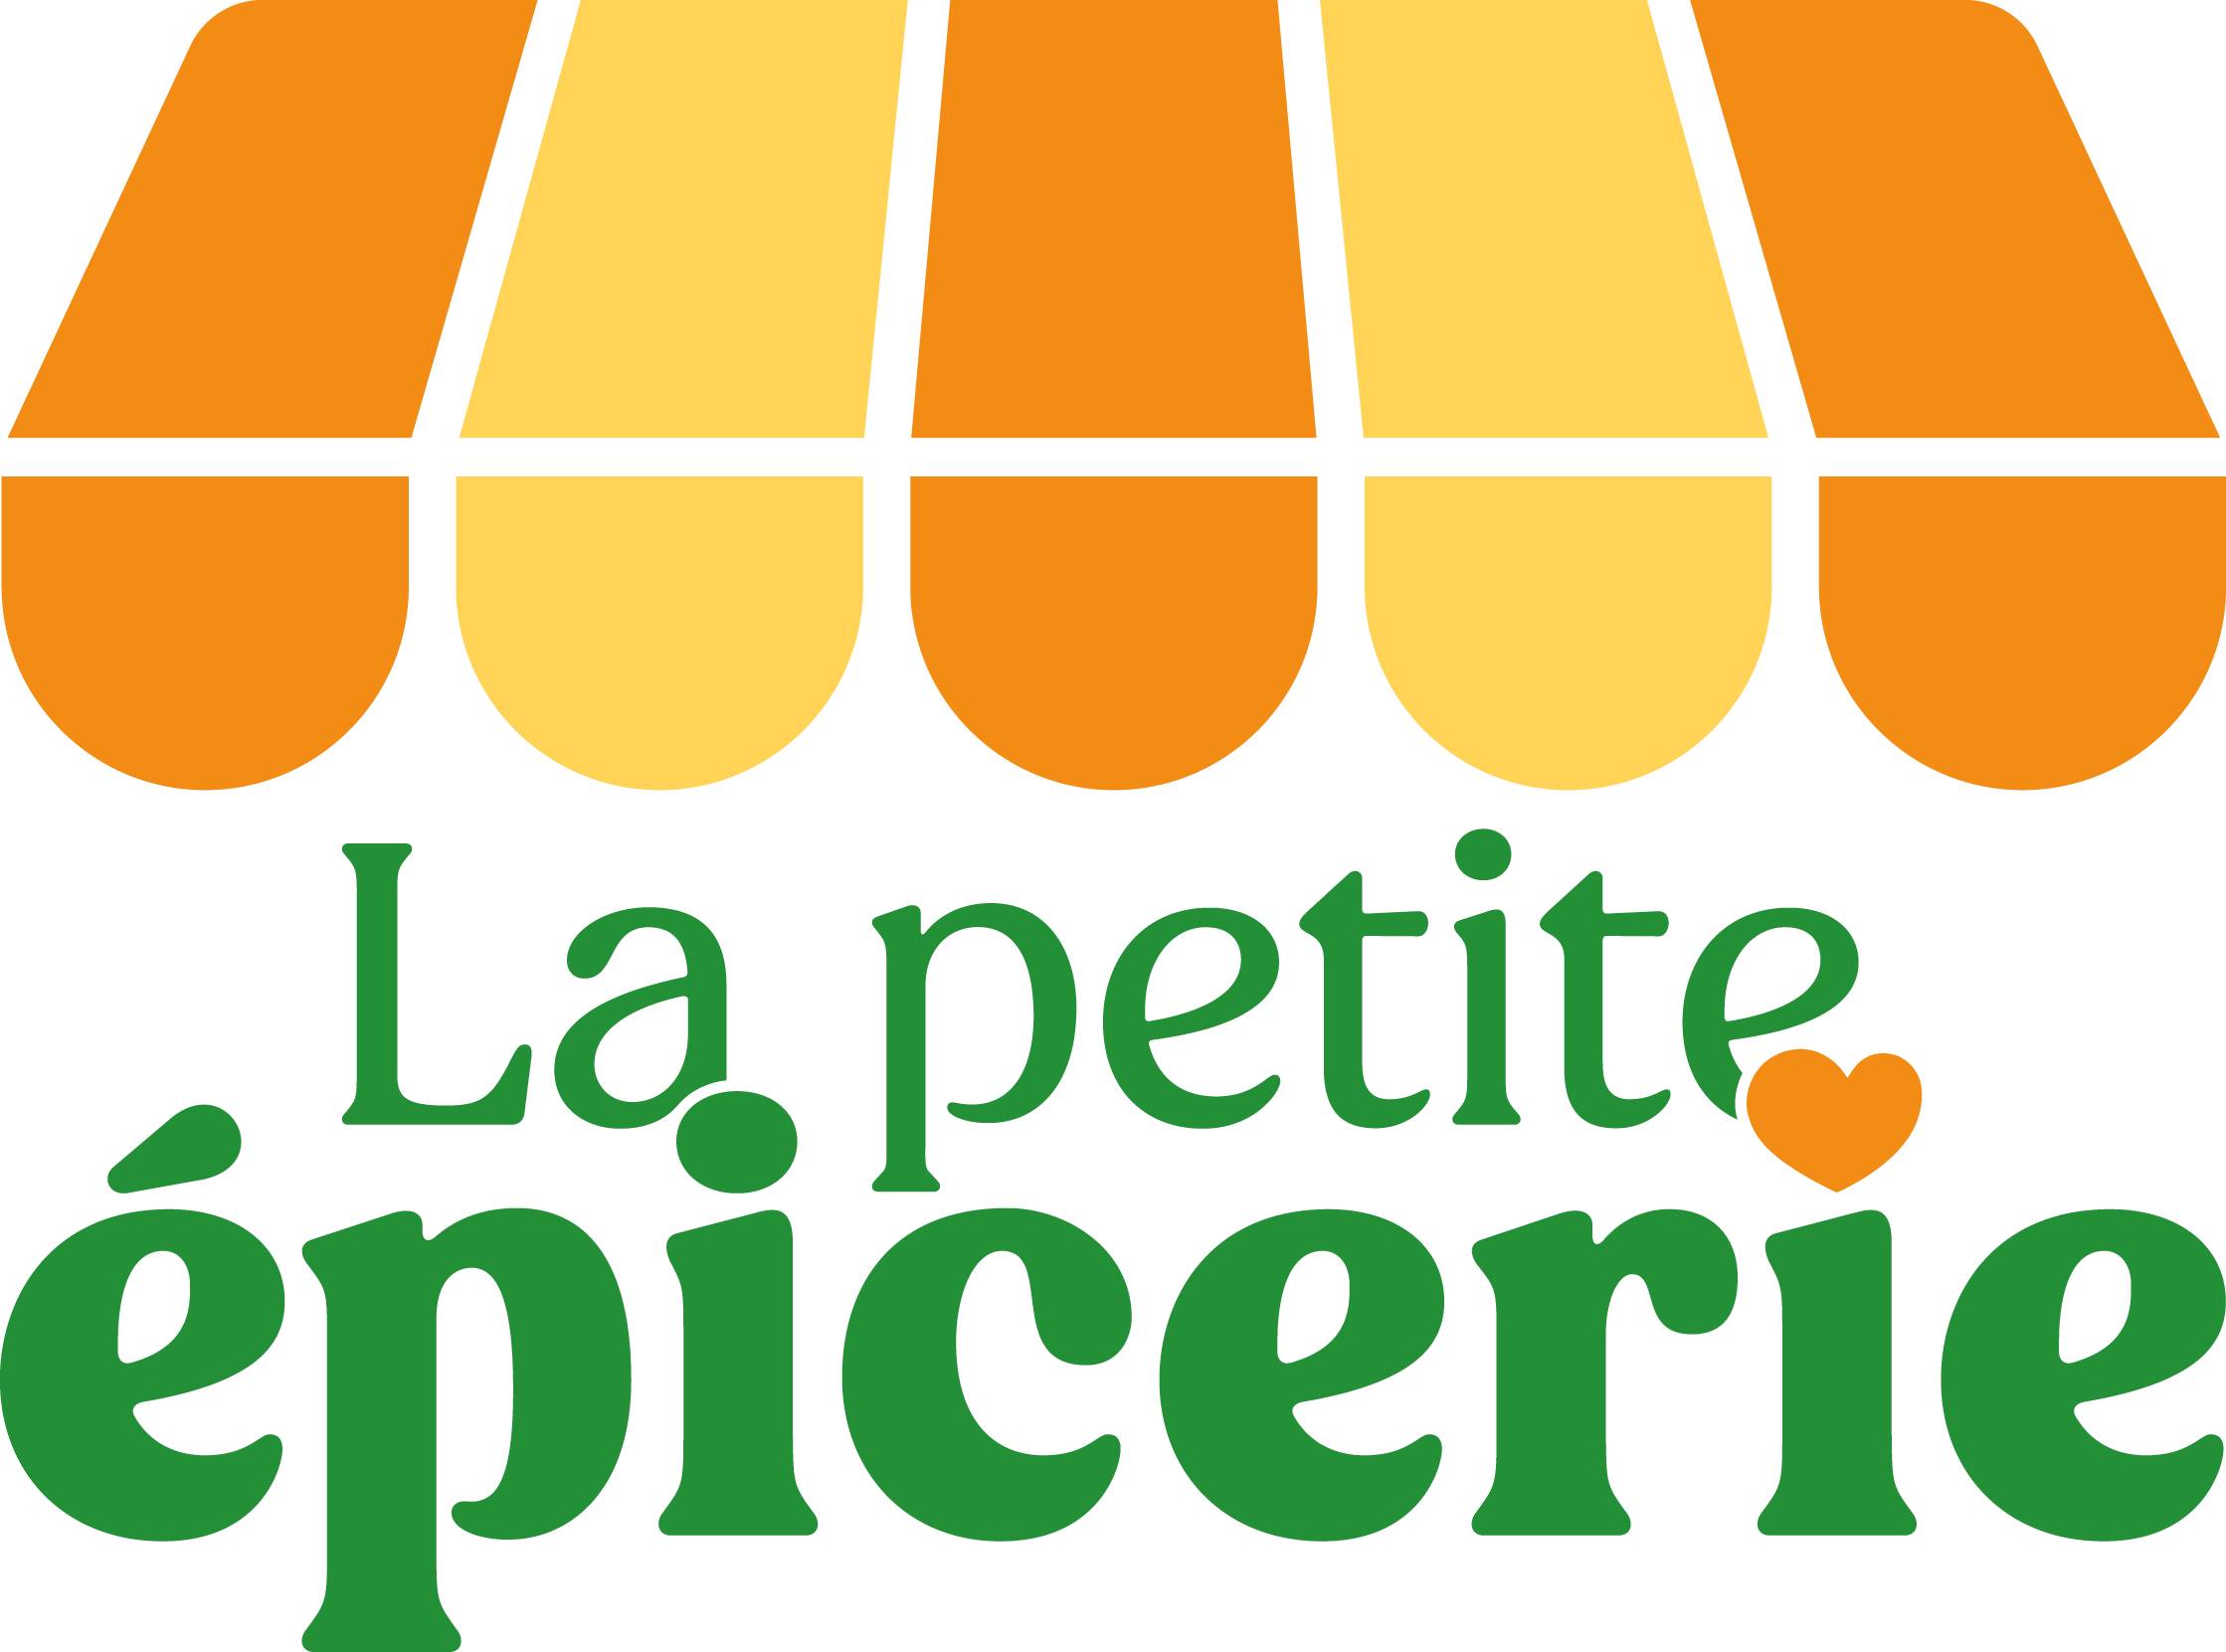 LaPetiteEpicerie_Logo_CMJN_laabo